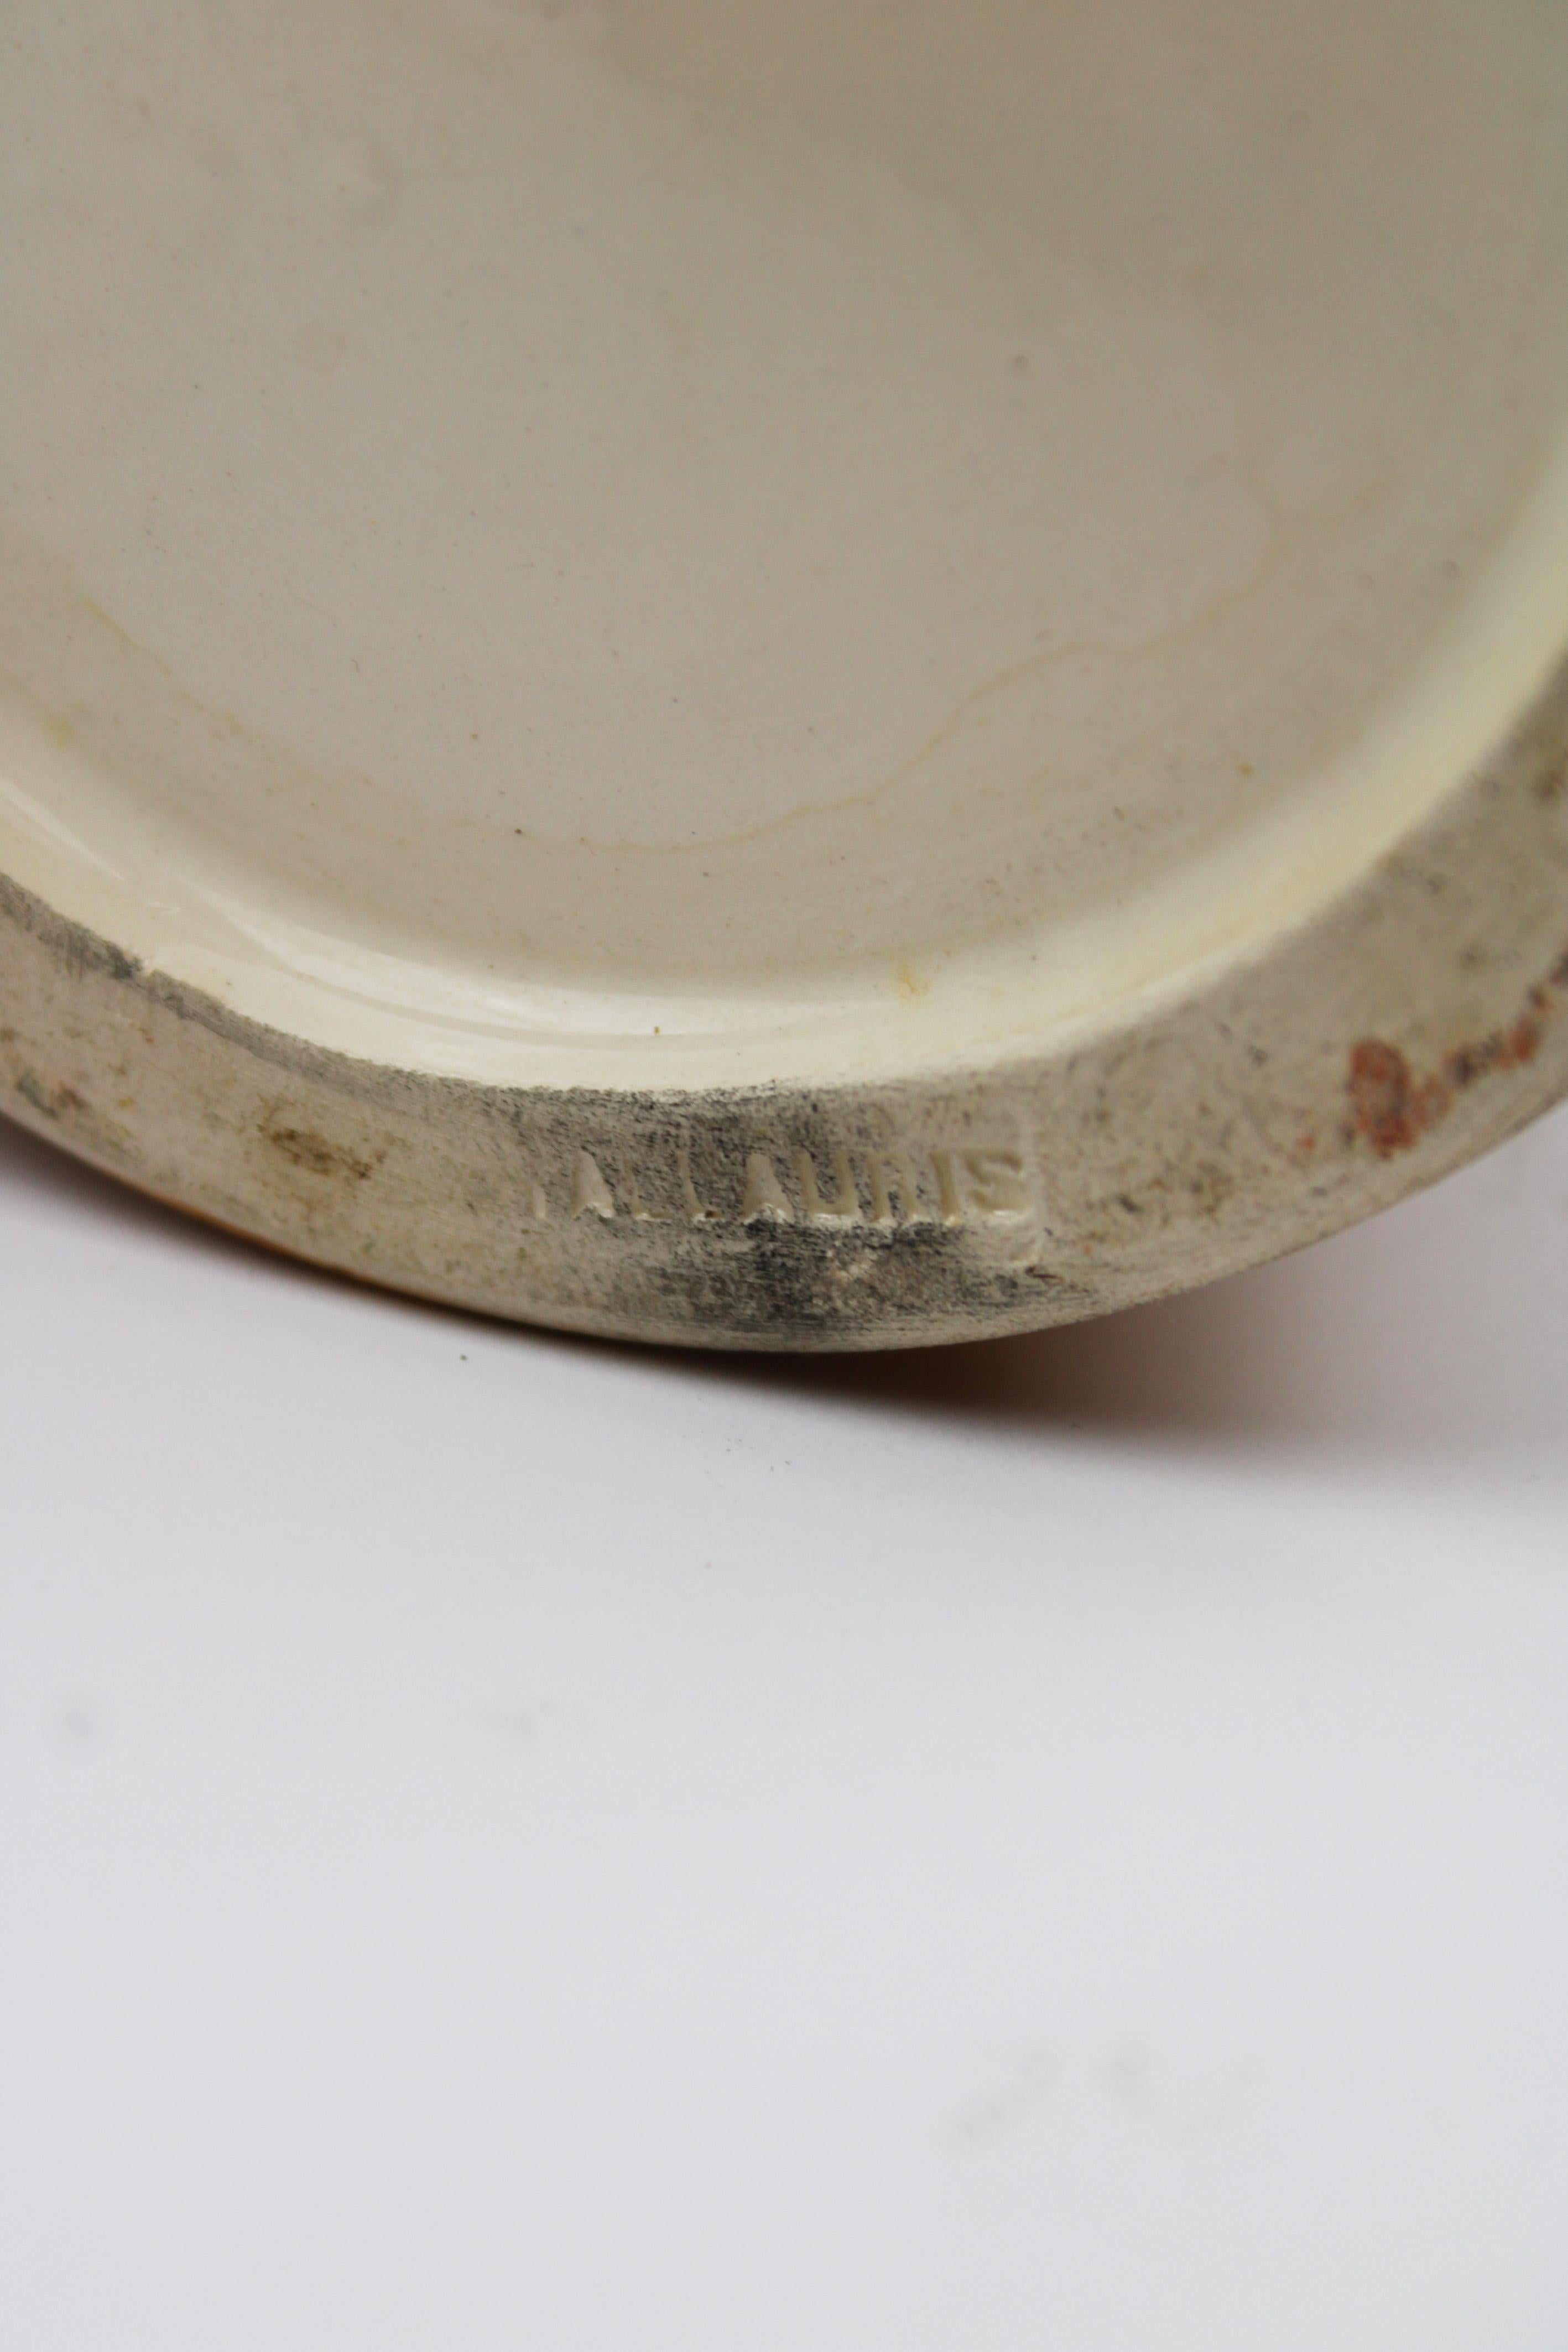 Faux Bois Mug & Cups by Grandjean Jourdan Vallauris Ceramics France 1960's For Sale 2